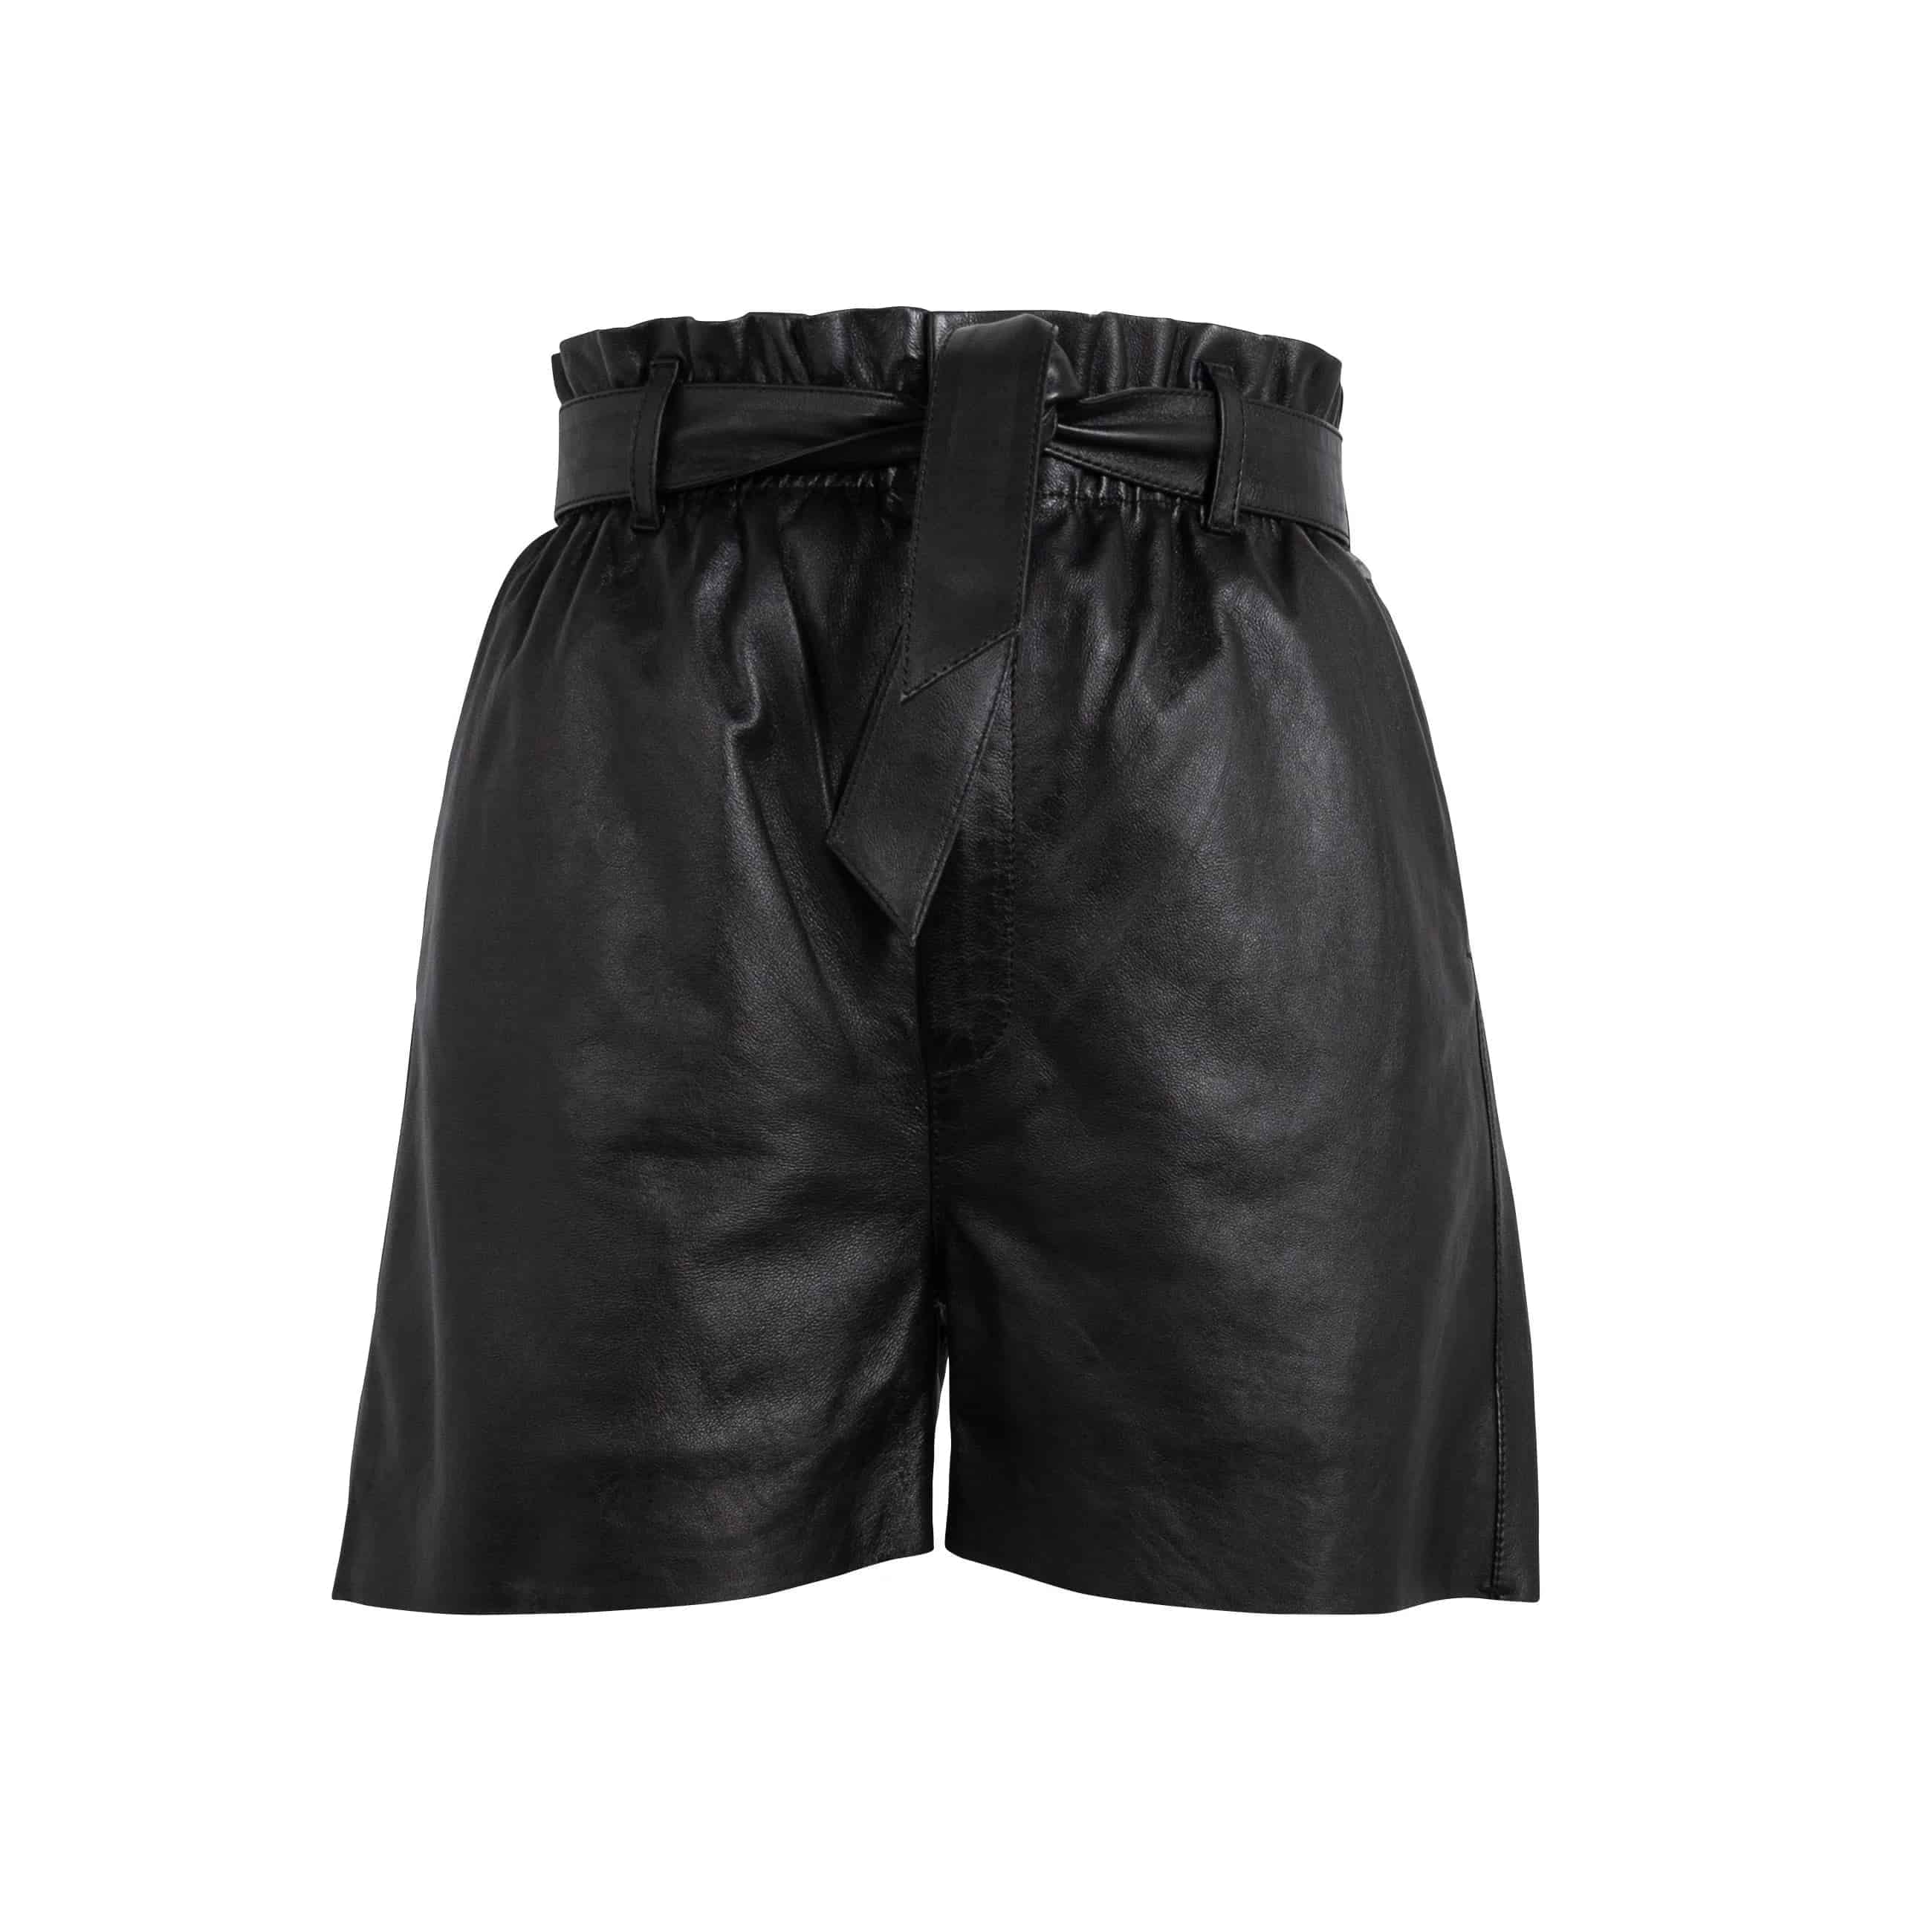 Mauritius Liz Leather Short in Black - S - Bottoms